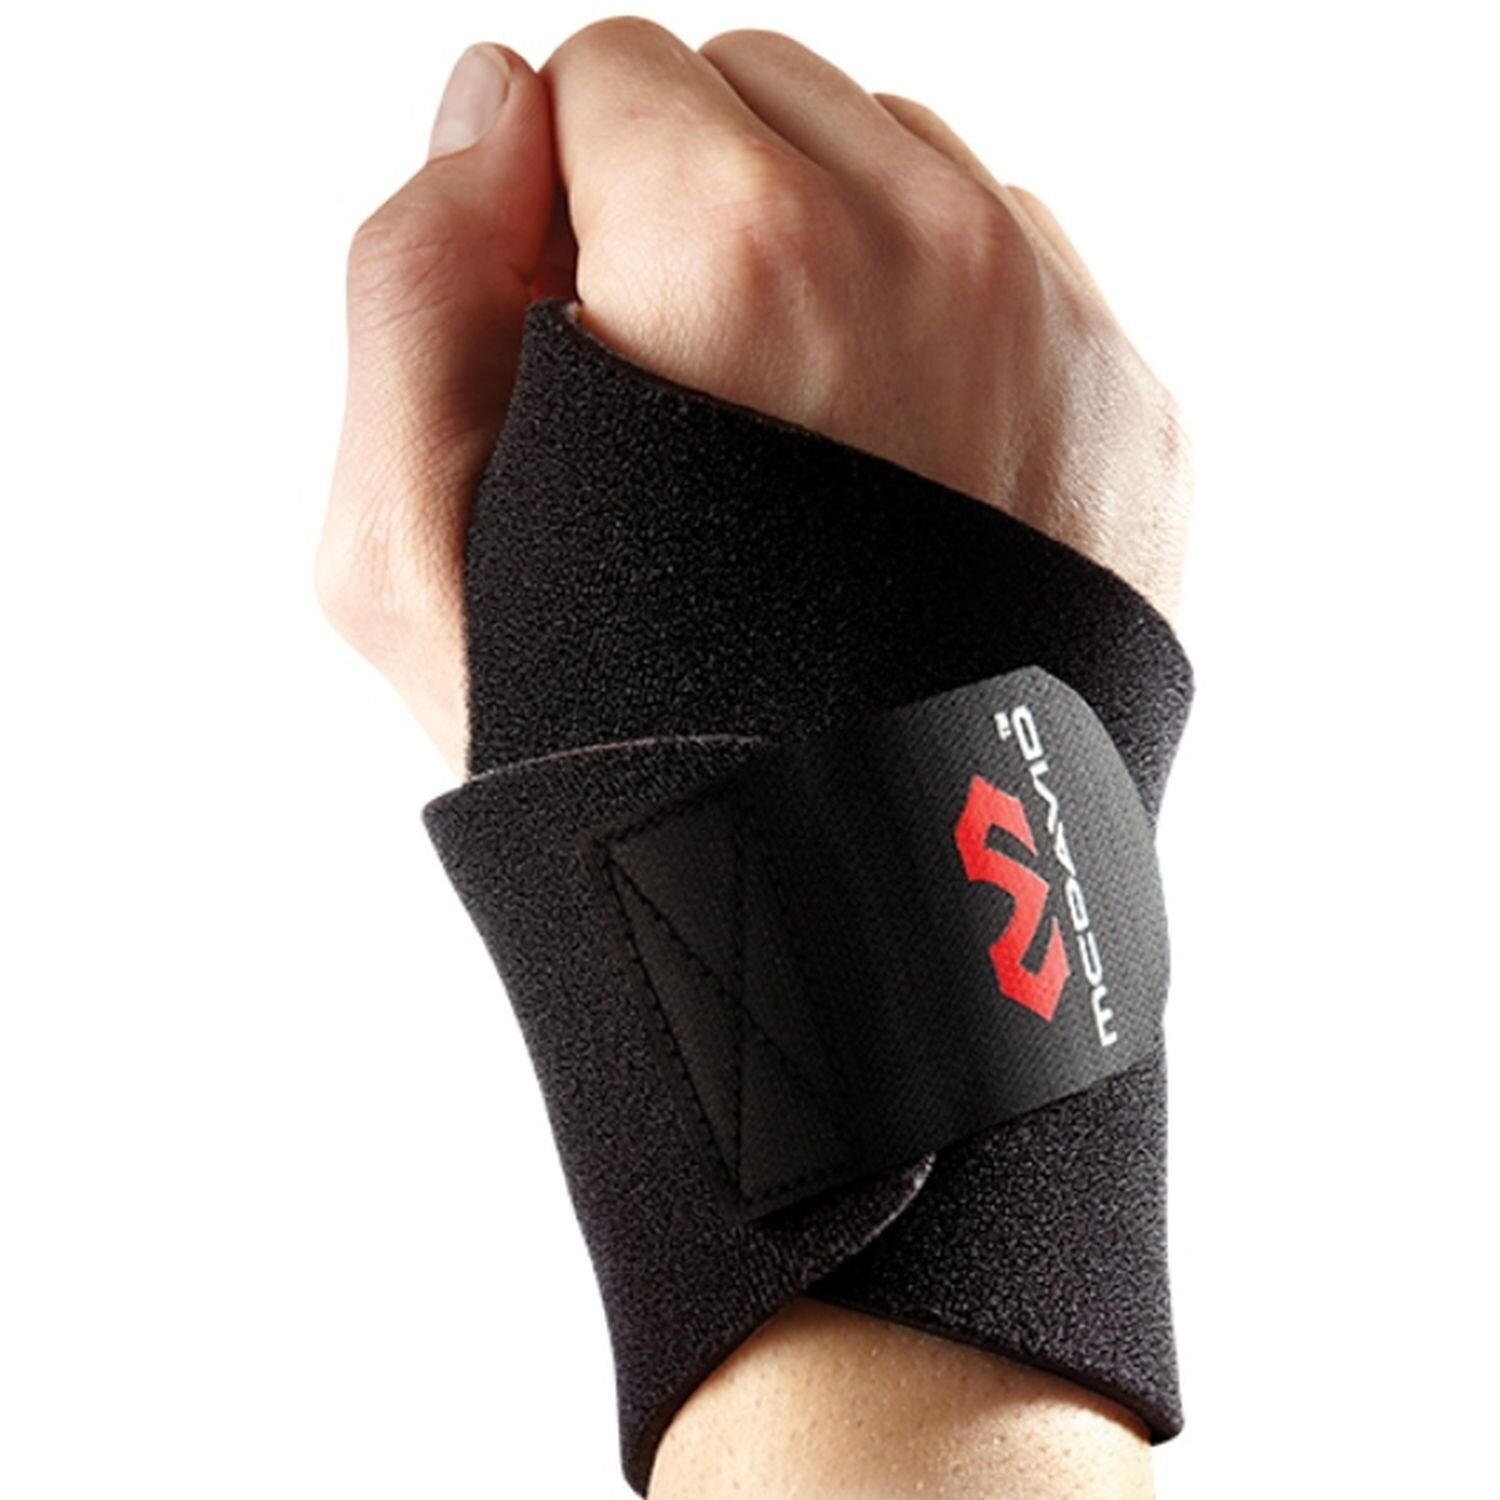 McDavid Wrist Support - Adjustable Strap